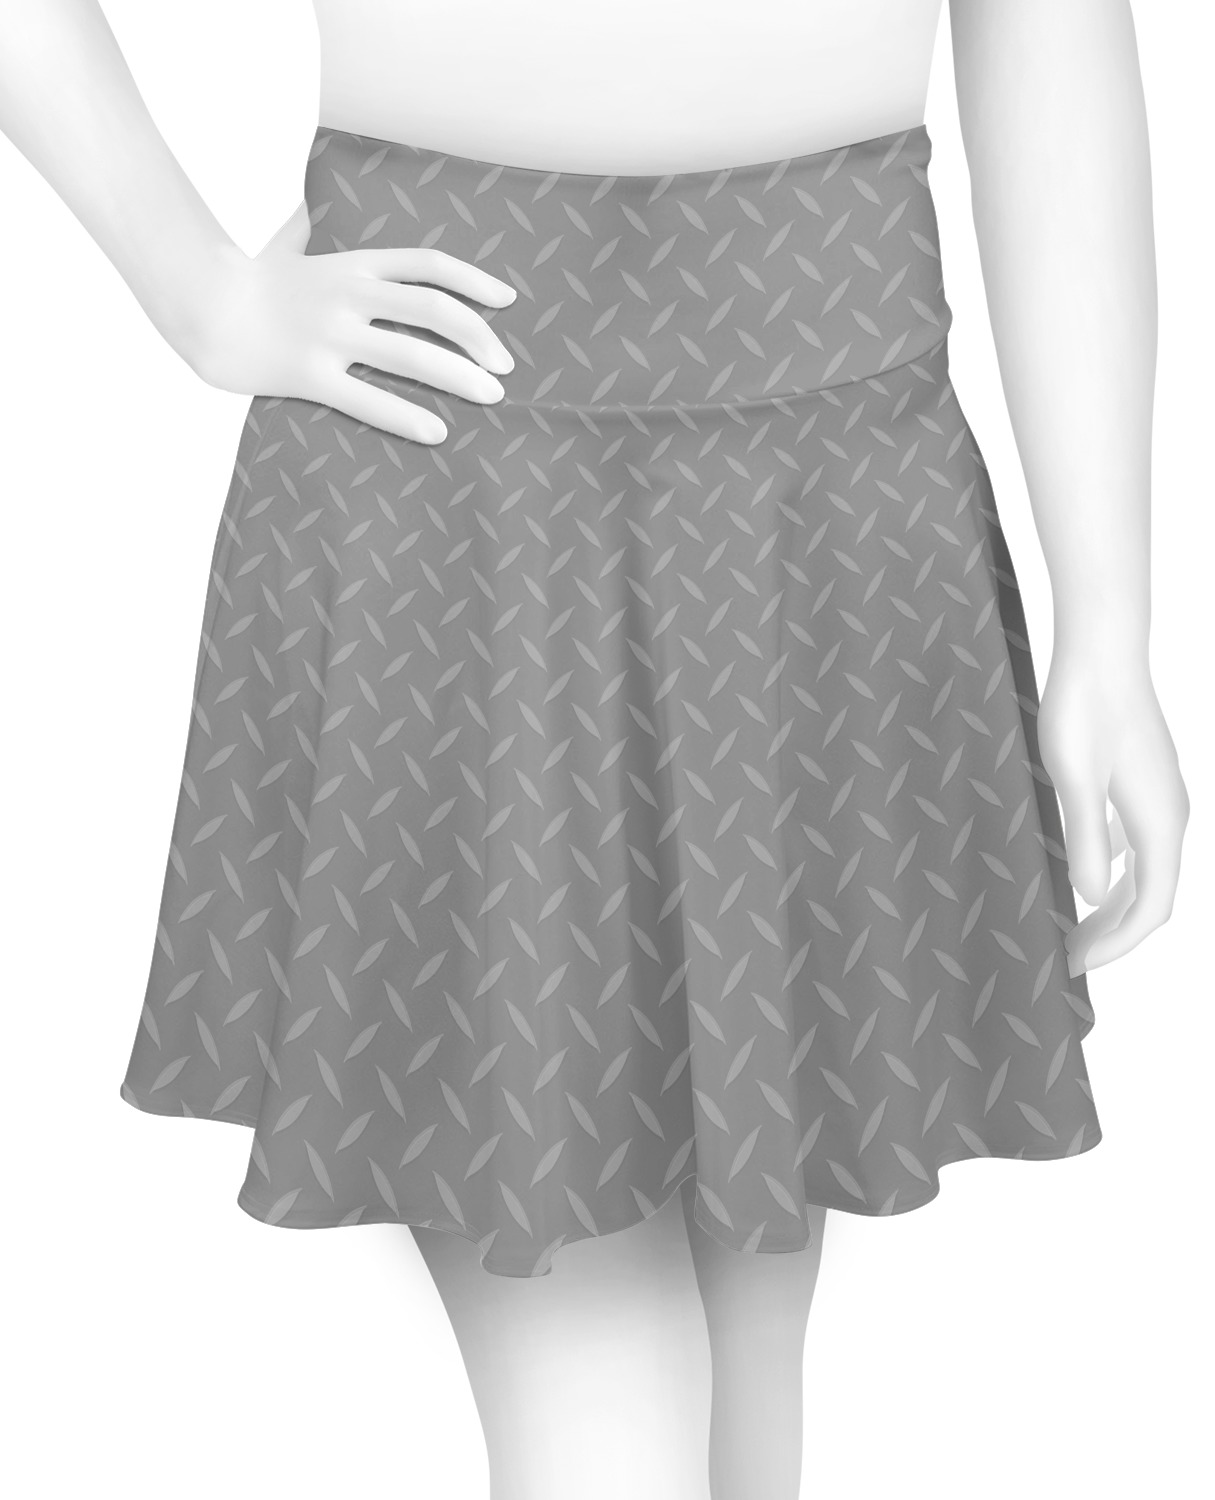 Diamond Plate Skater Skirt - Small (Personalized) - YouCustomizeIt